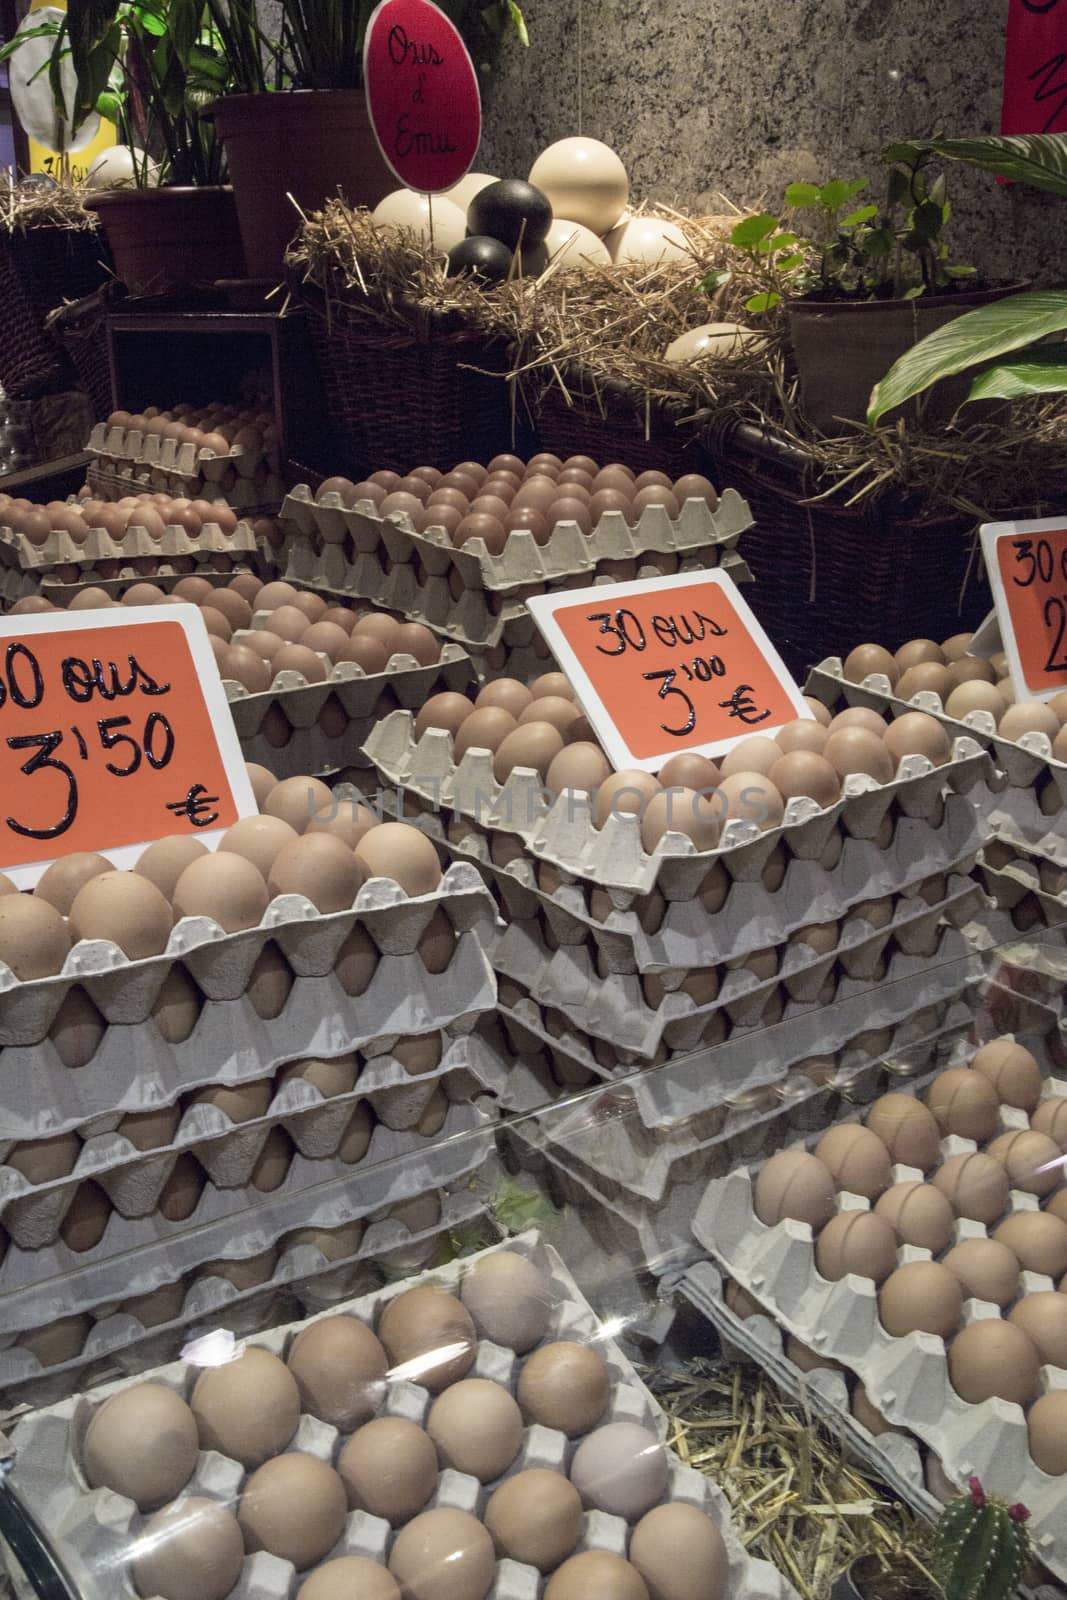 Eggs for sale at La Mercat, Barcelona